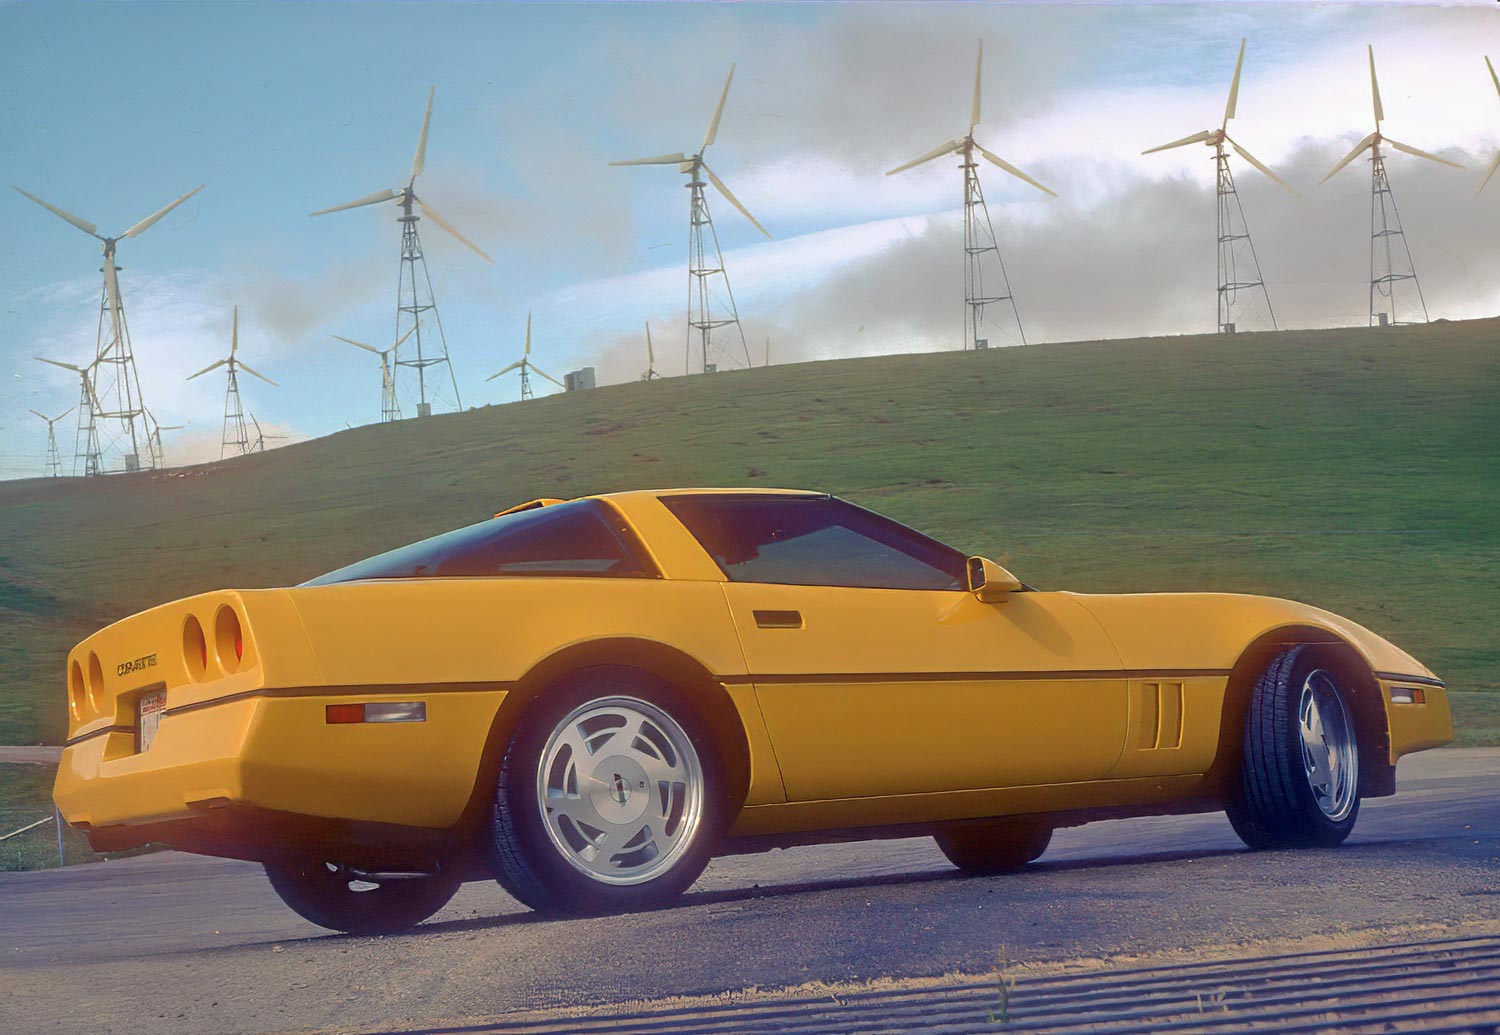 1987 Corvette Coupe in Yellow